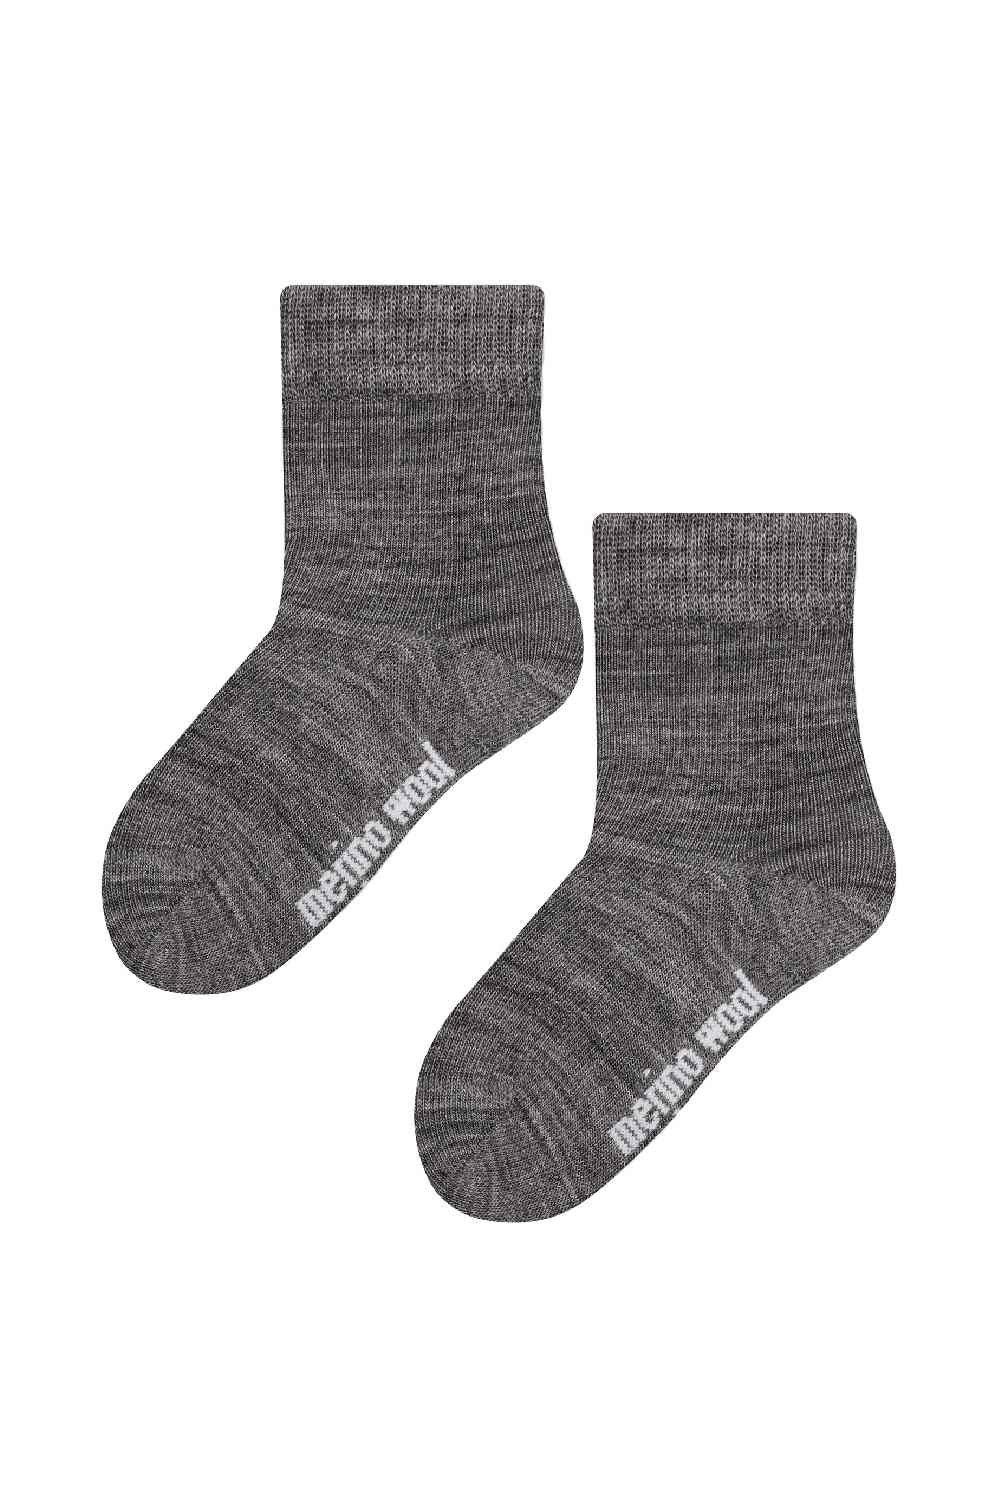 Toddlers Merino Wool Socks - Warm Thick Socks for Winter